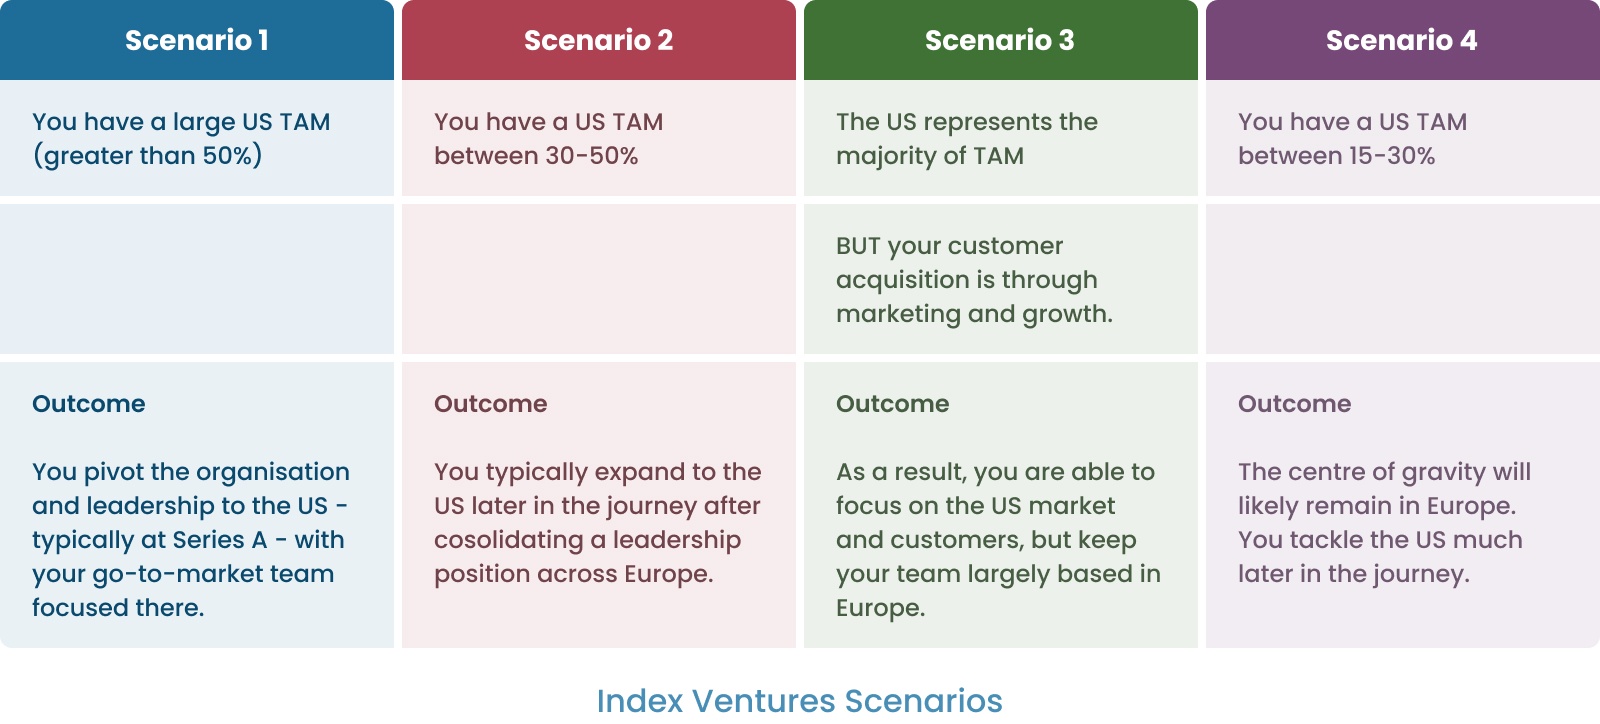  Index Ventures Scenarios